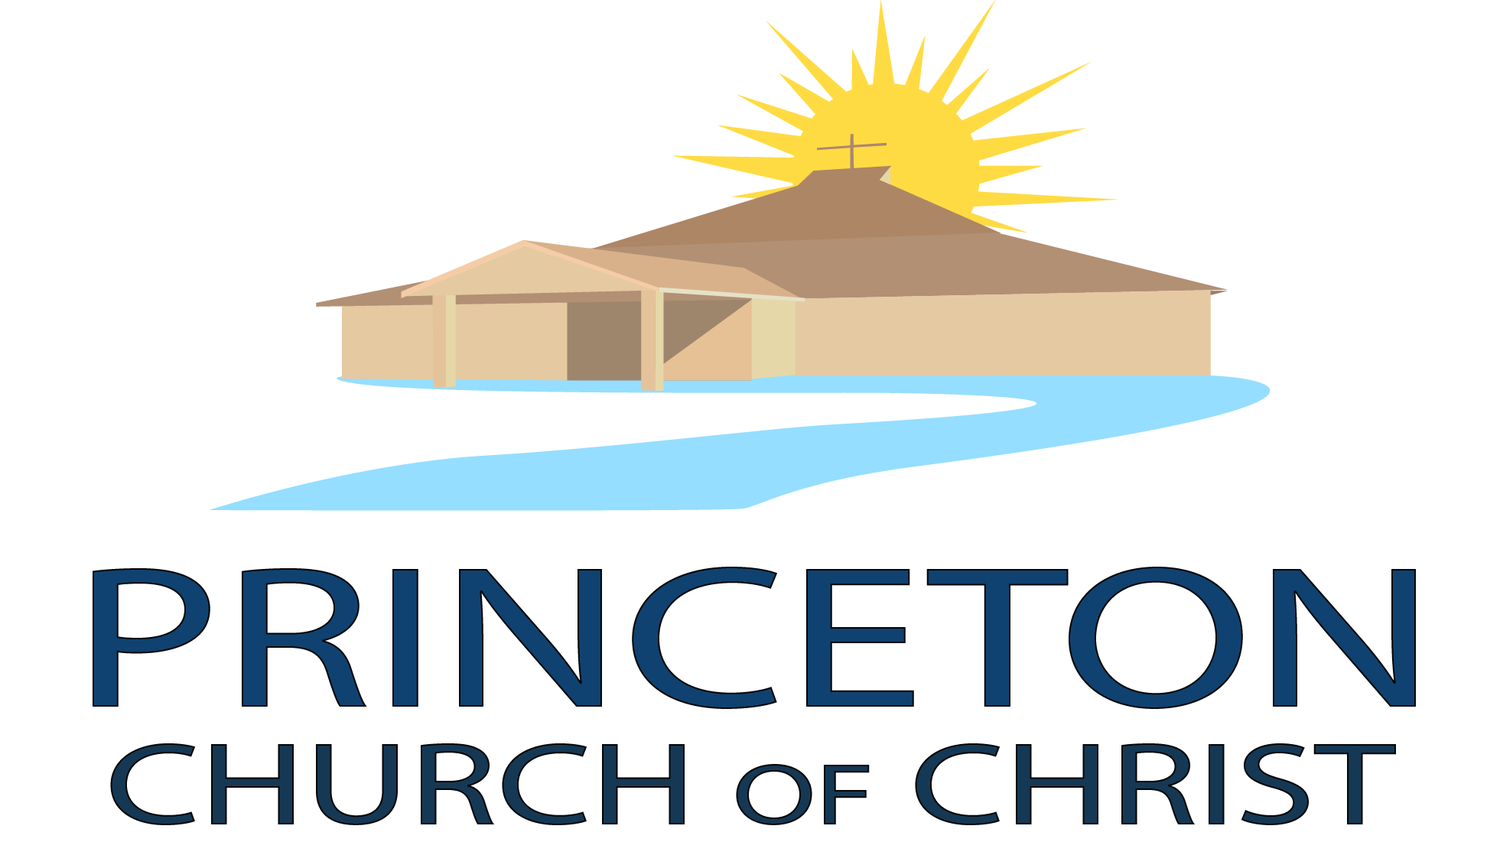 Princeton Church of Christ